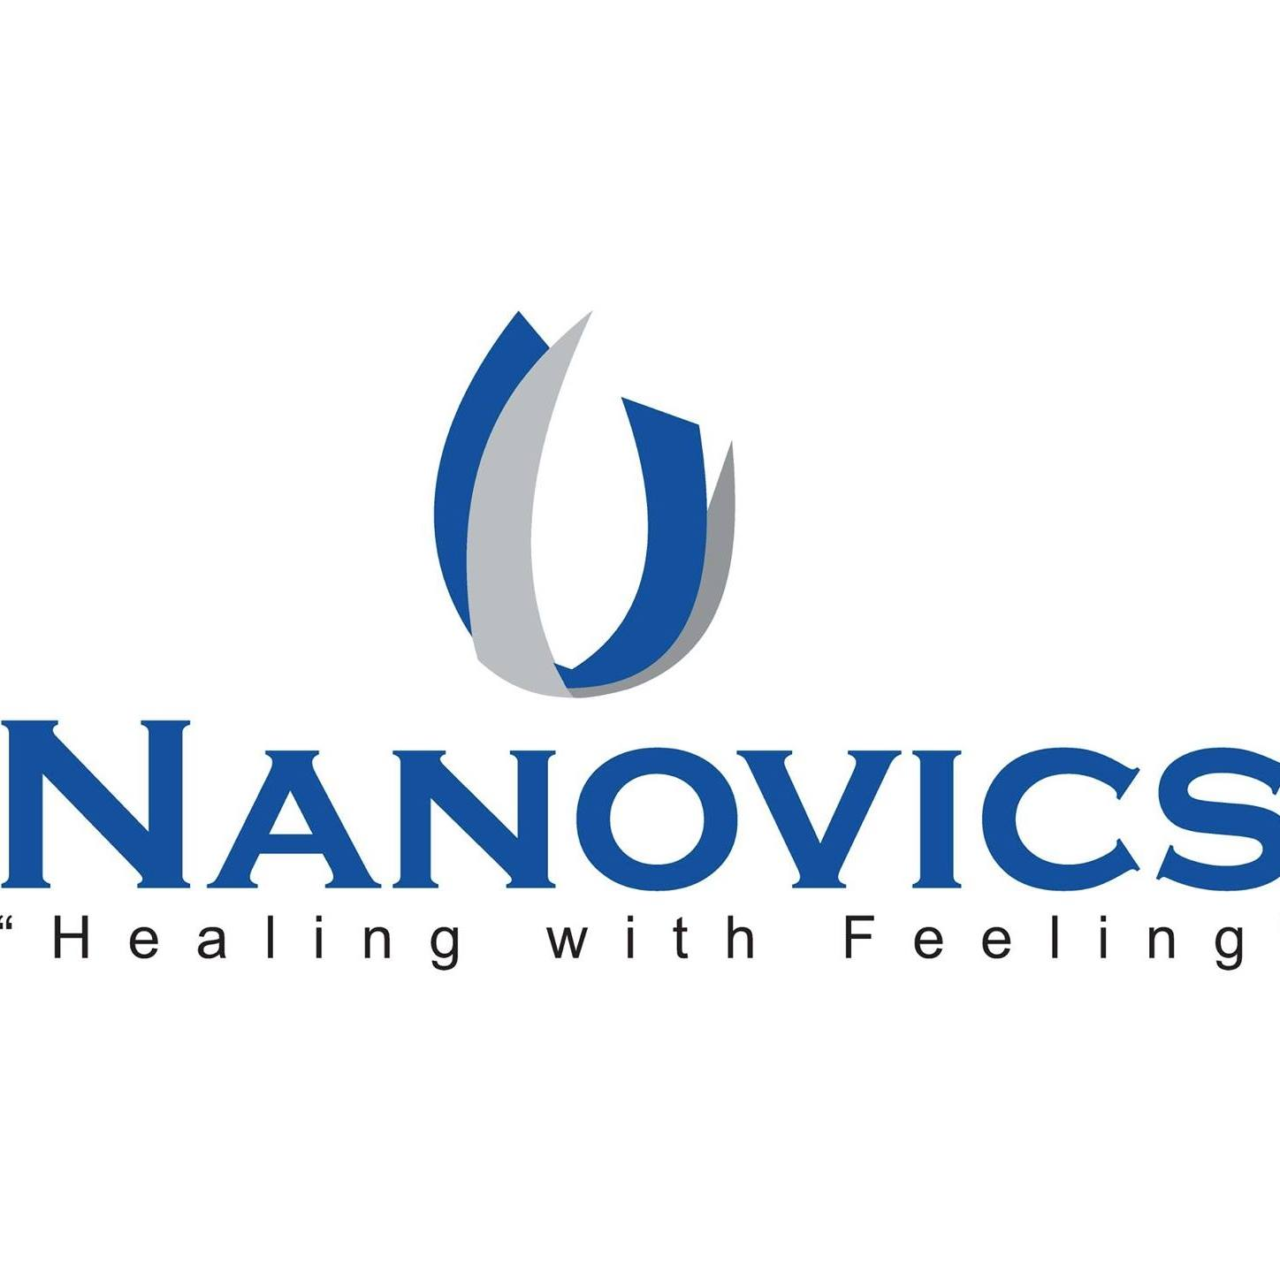 Nanovics-Logo-1280x1280.png